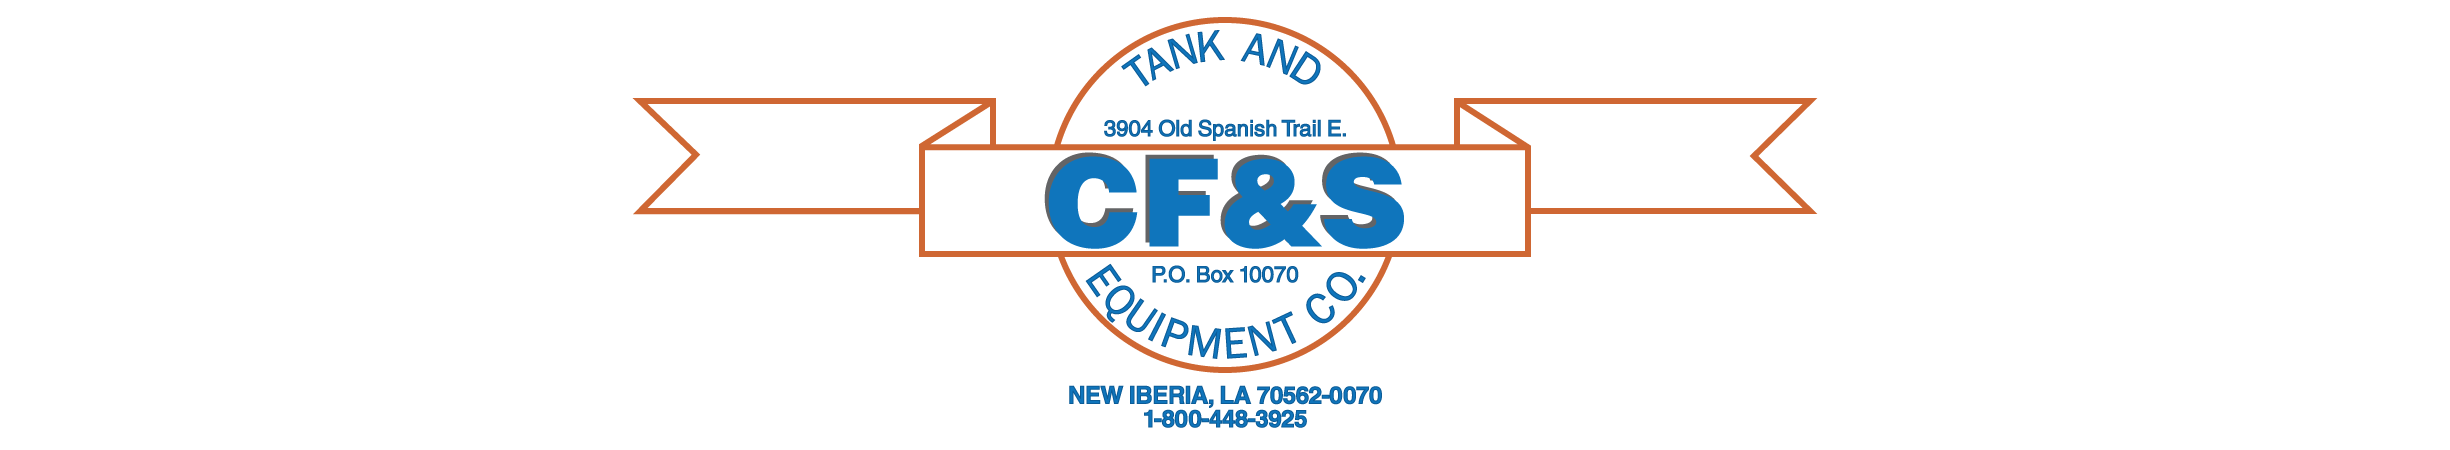 CF&S Tank & Equipment Co.